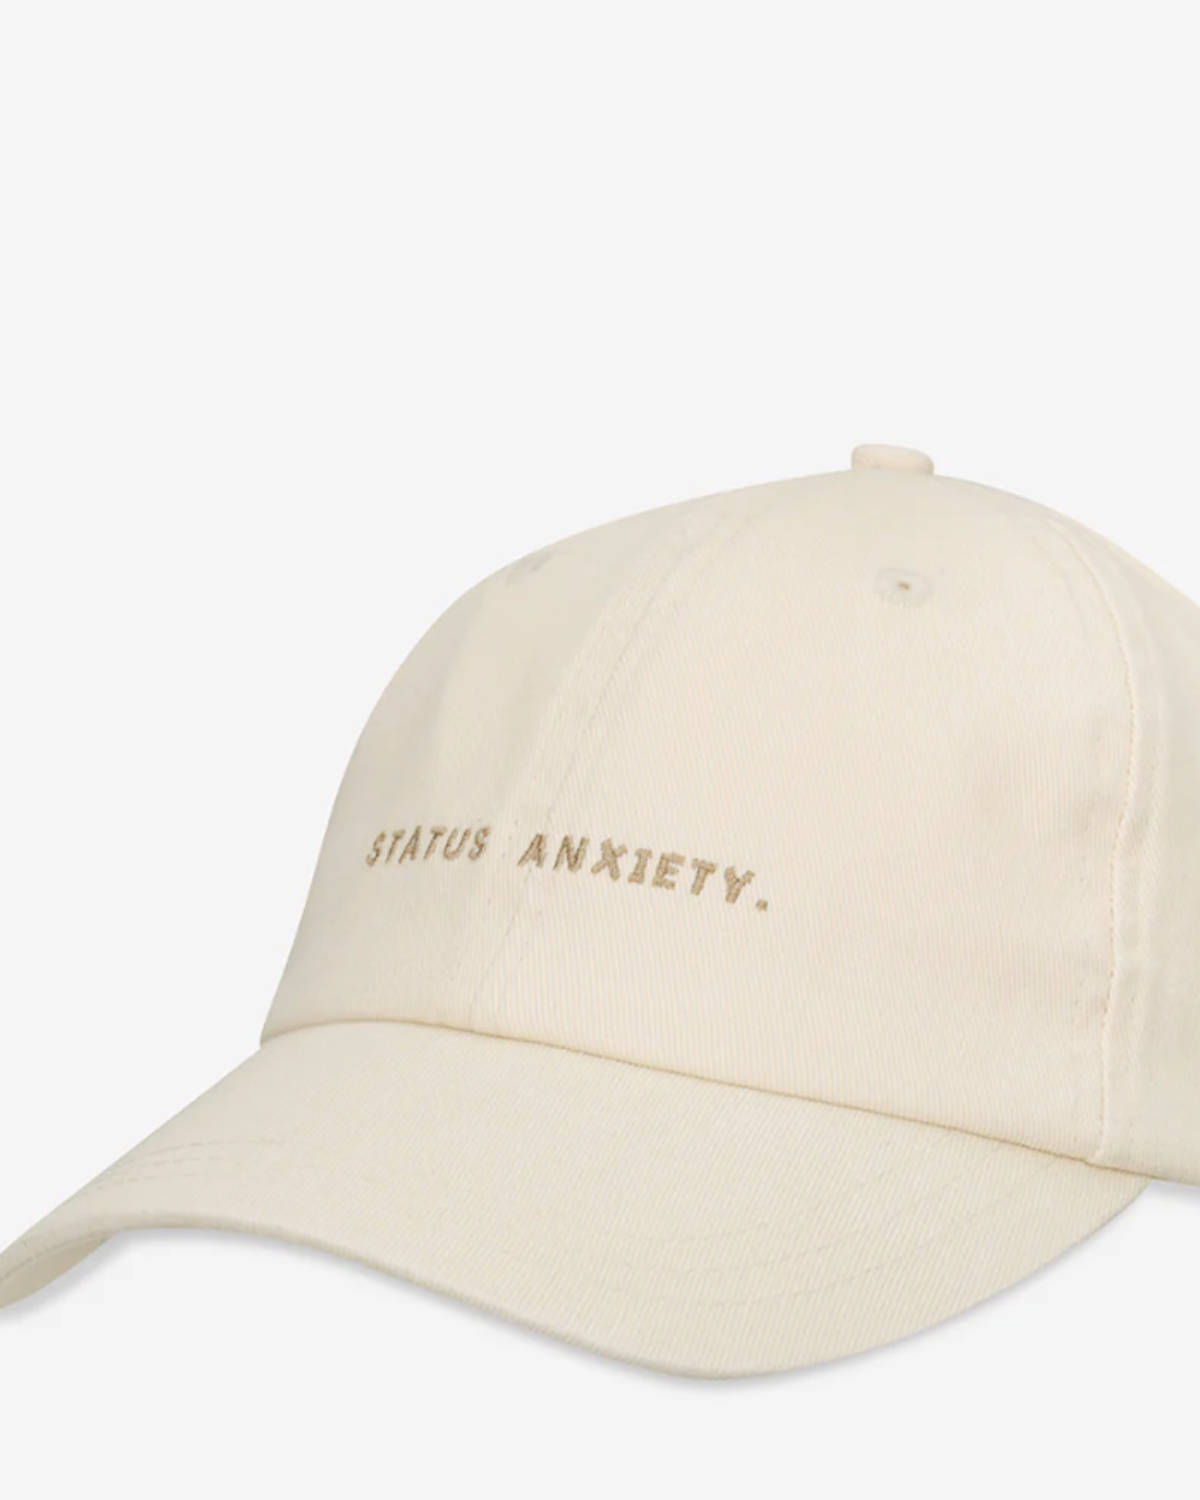 Status Anxiety Under the Sun Hat in Cream